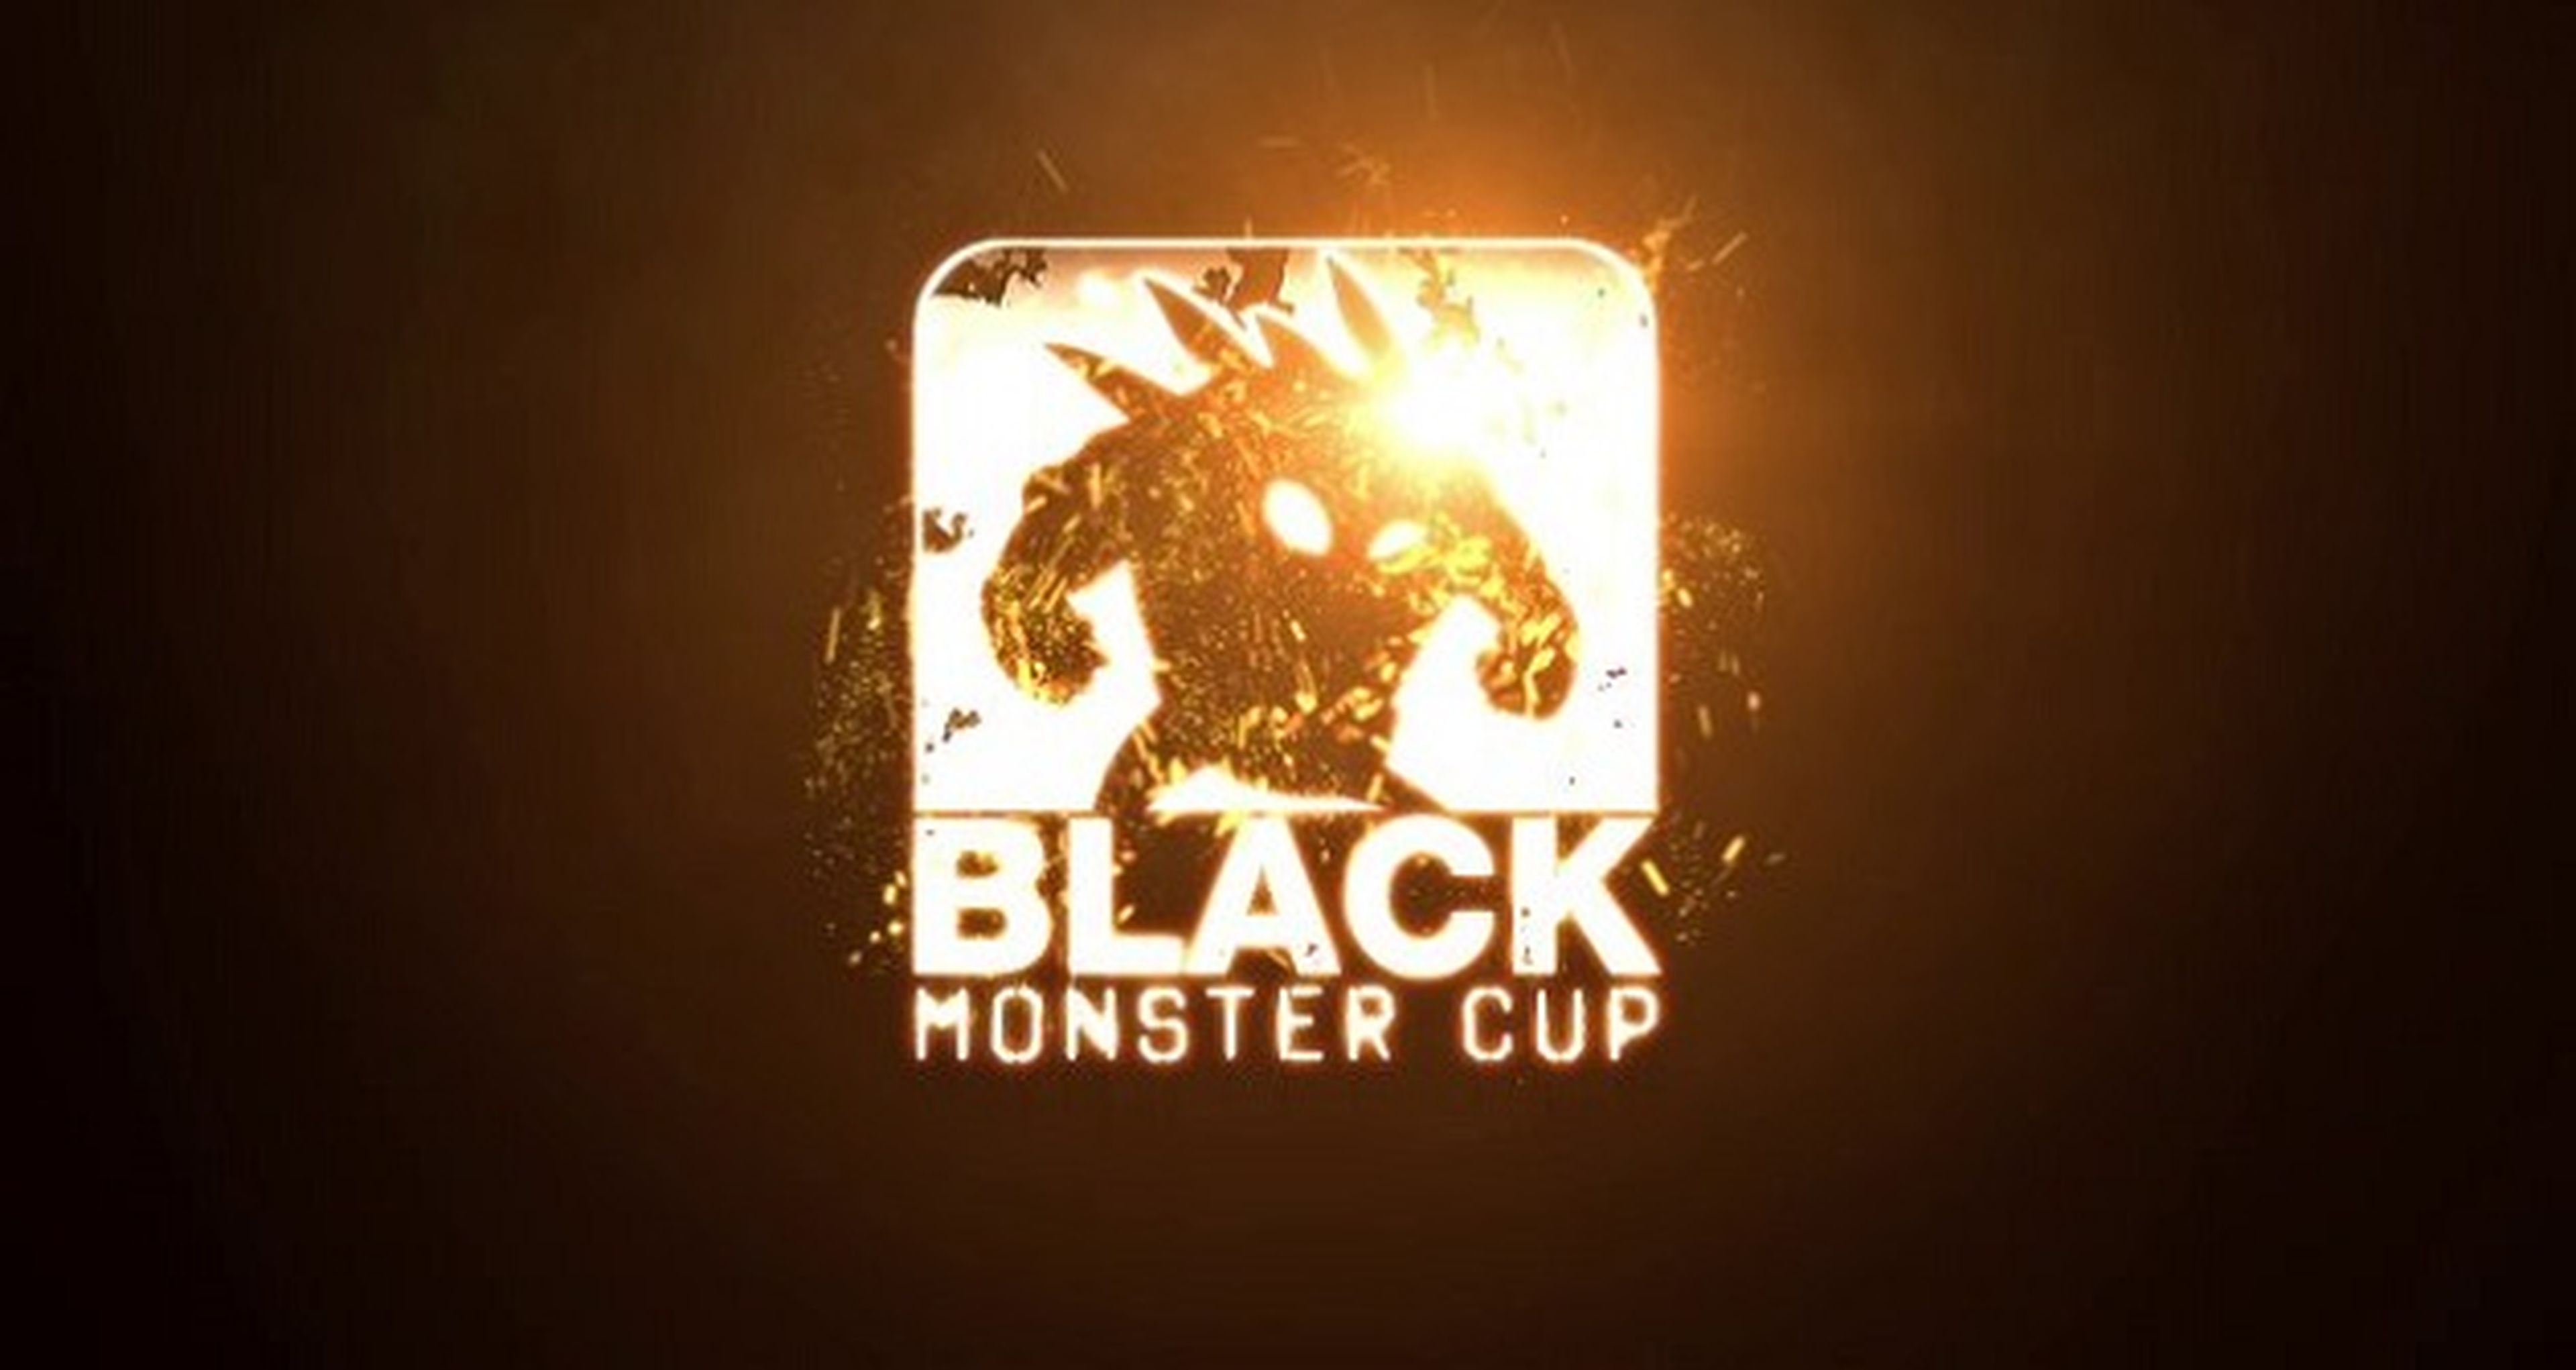 Este fin de semana se celebra la Black Monster Cup